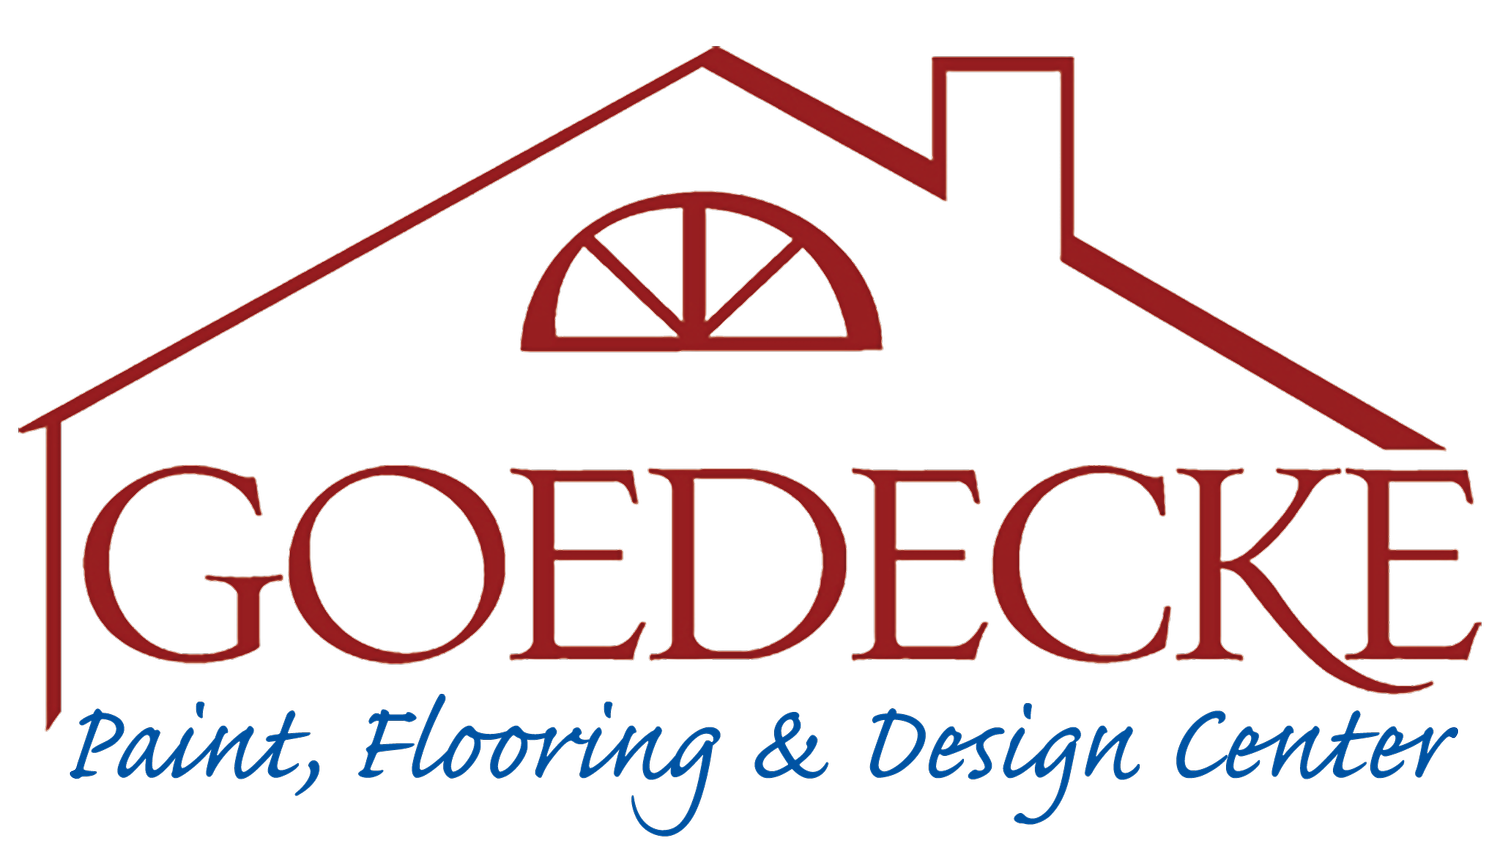 Goedecke Paint, Flooring and Design Center